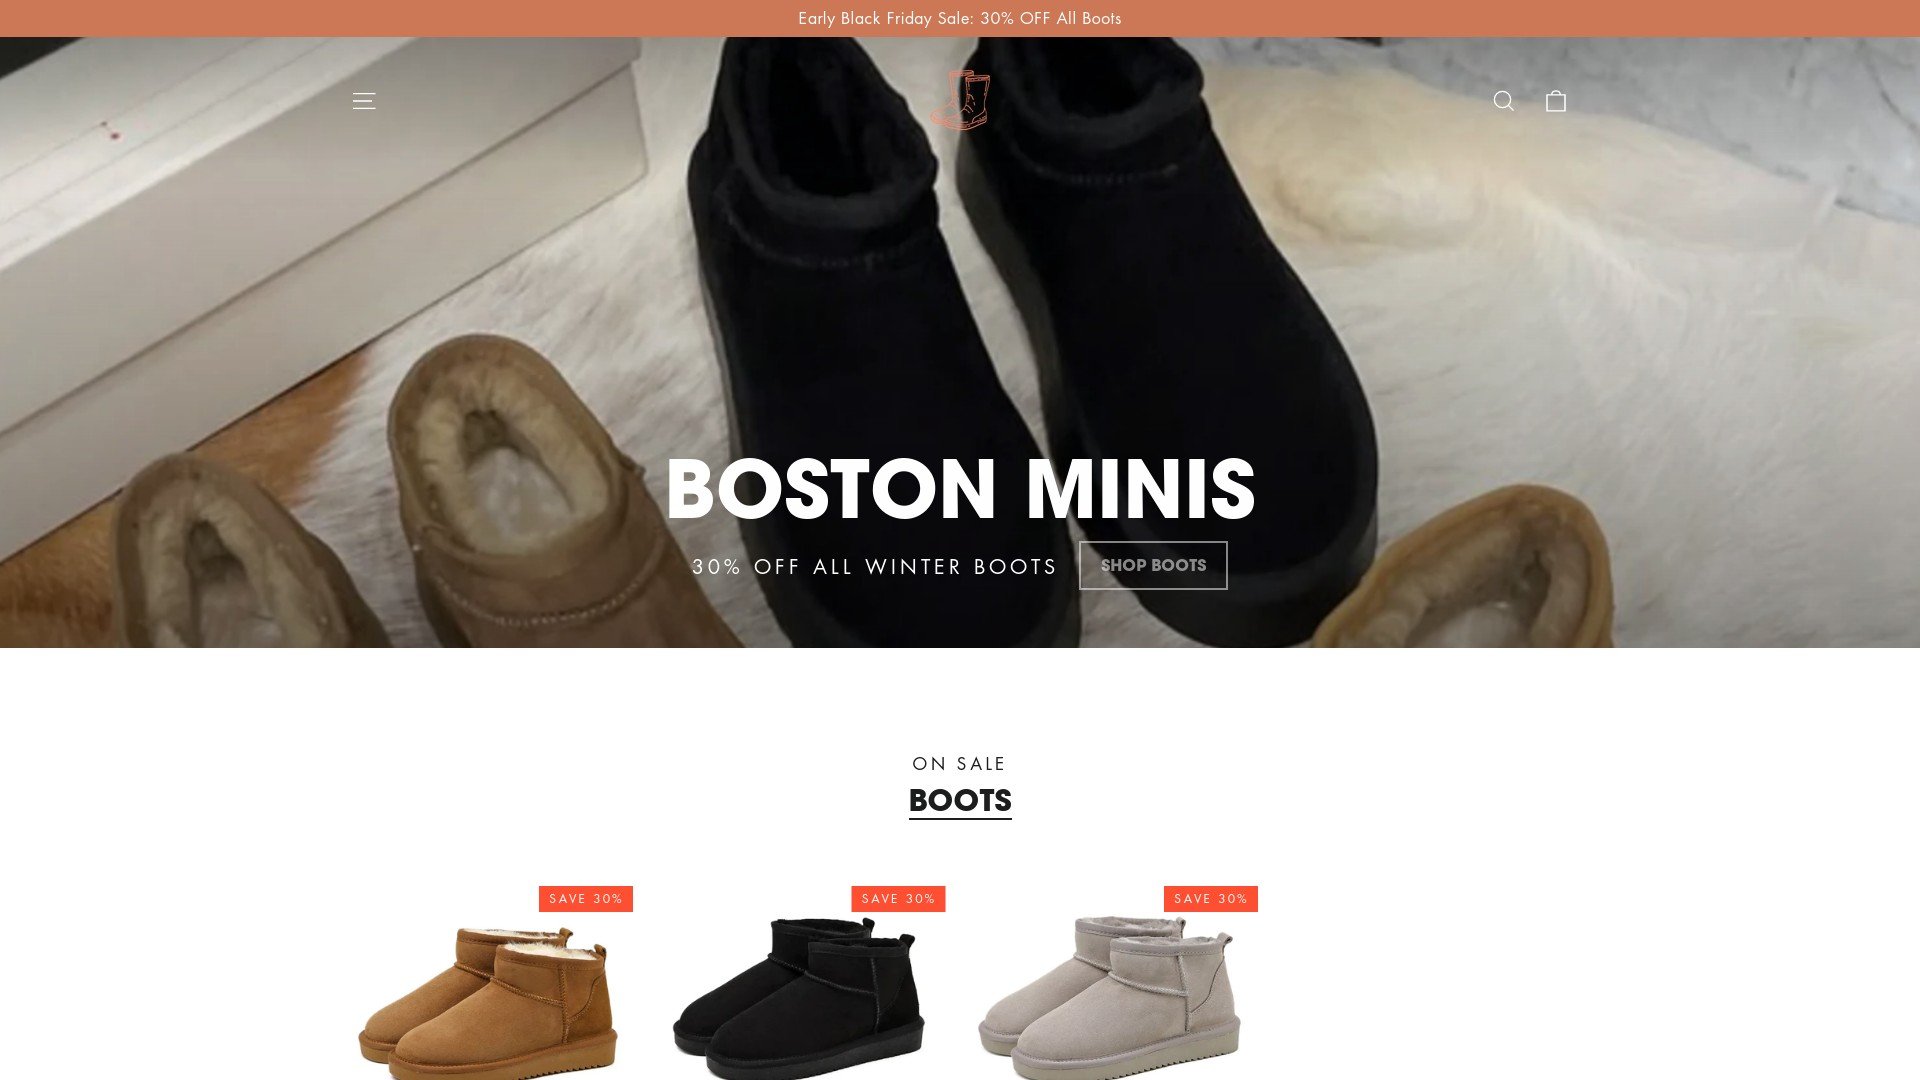 Bostonminiboots at bostonminiboots.com and patriotsacrifice.com